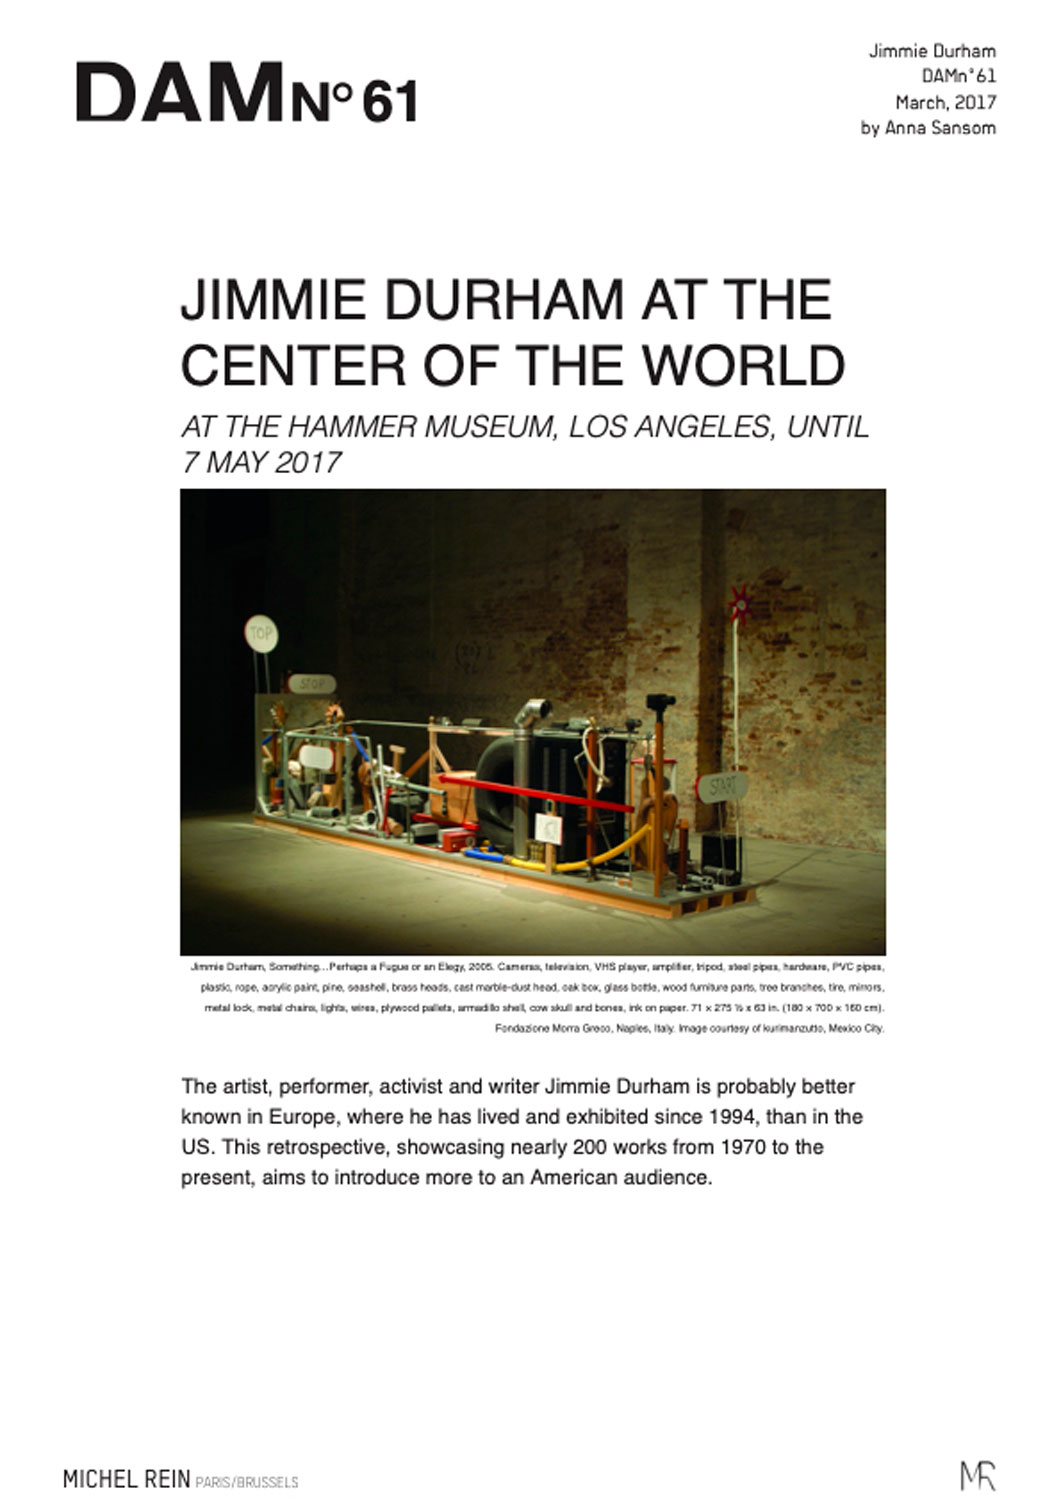 Jimmie Durham - DAMn61